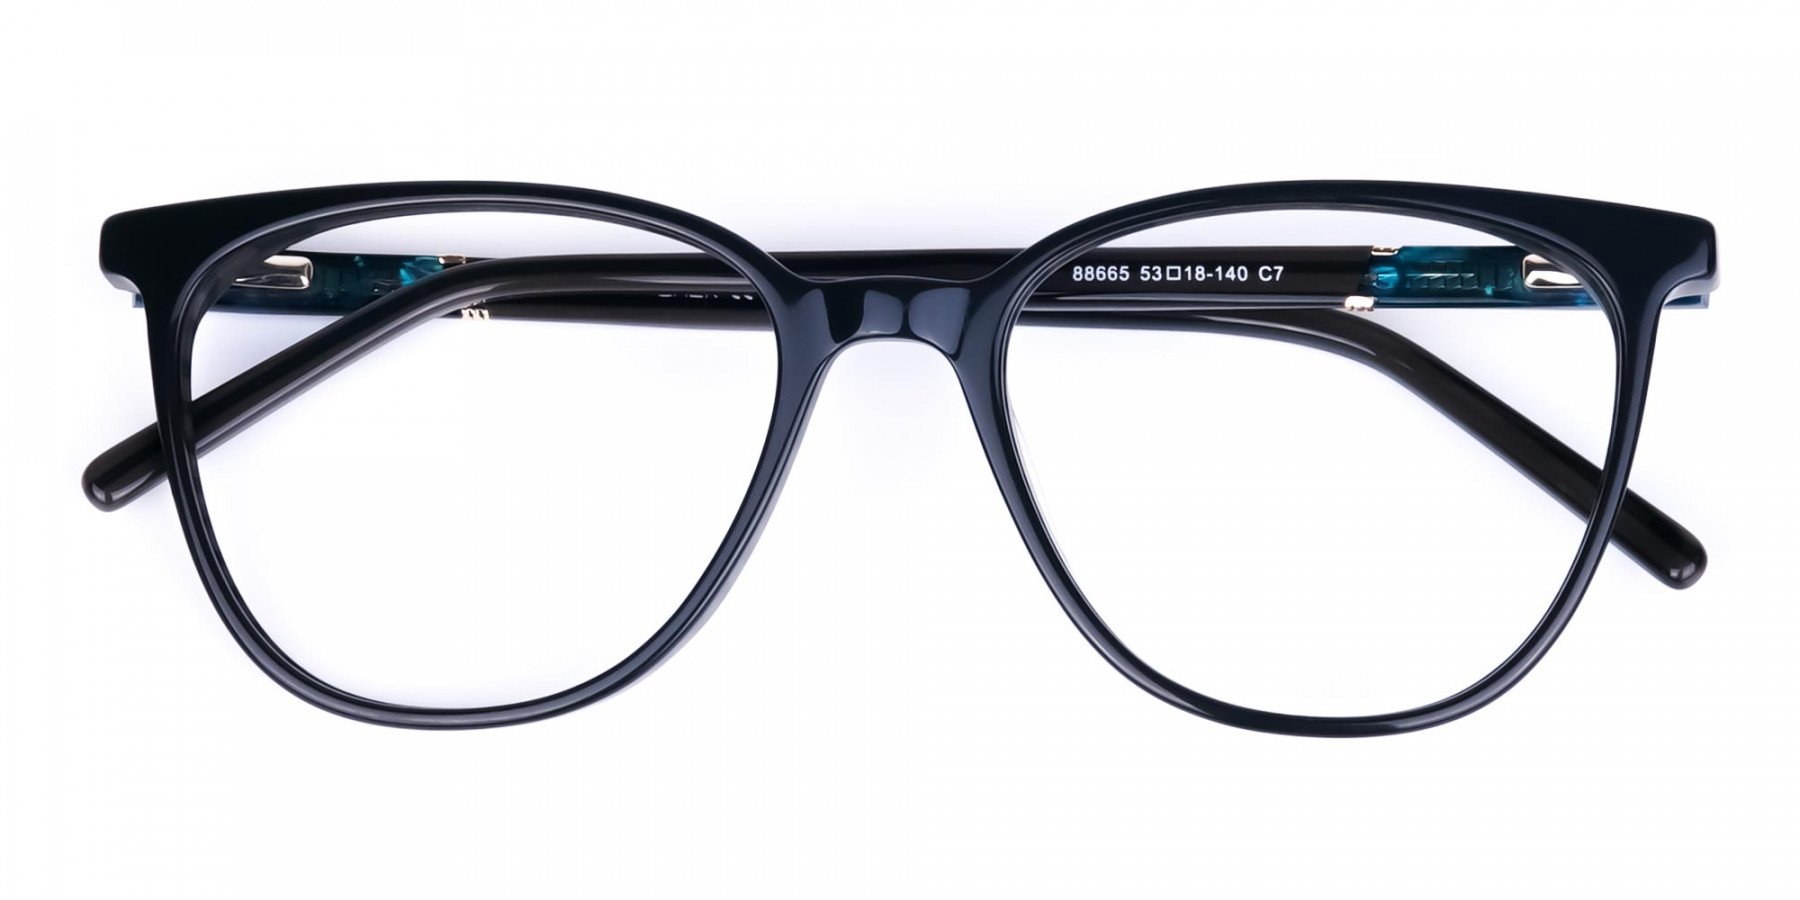 teal cat eye glasses - 1